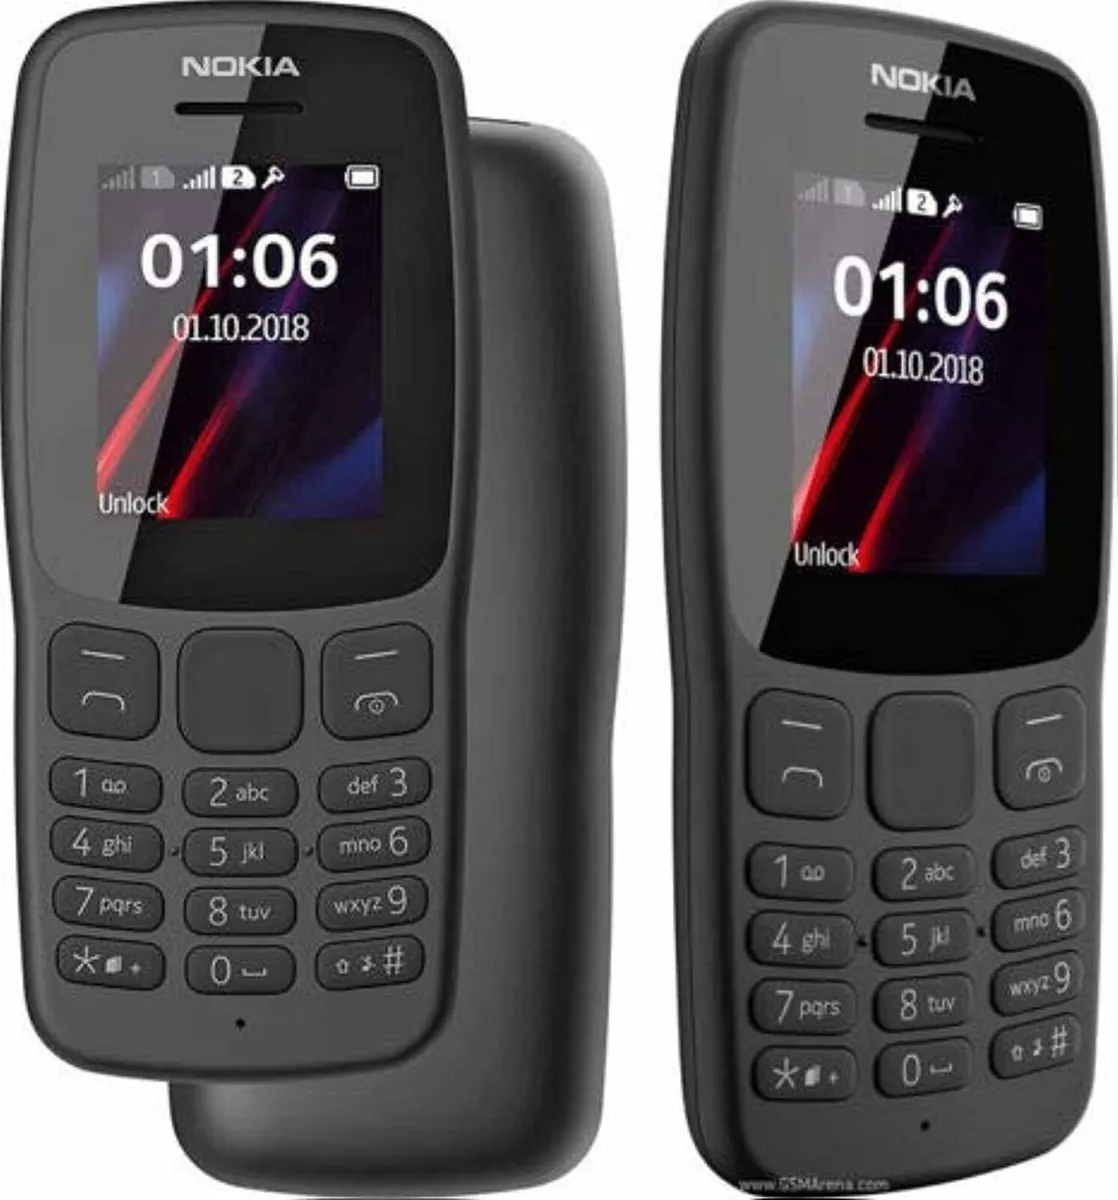 Nokia 106 - Image 1